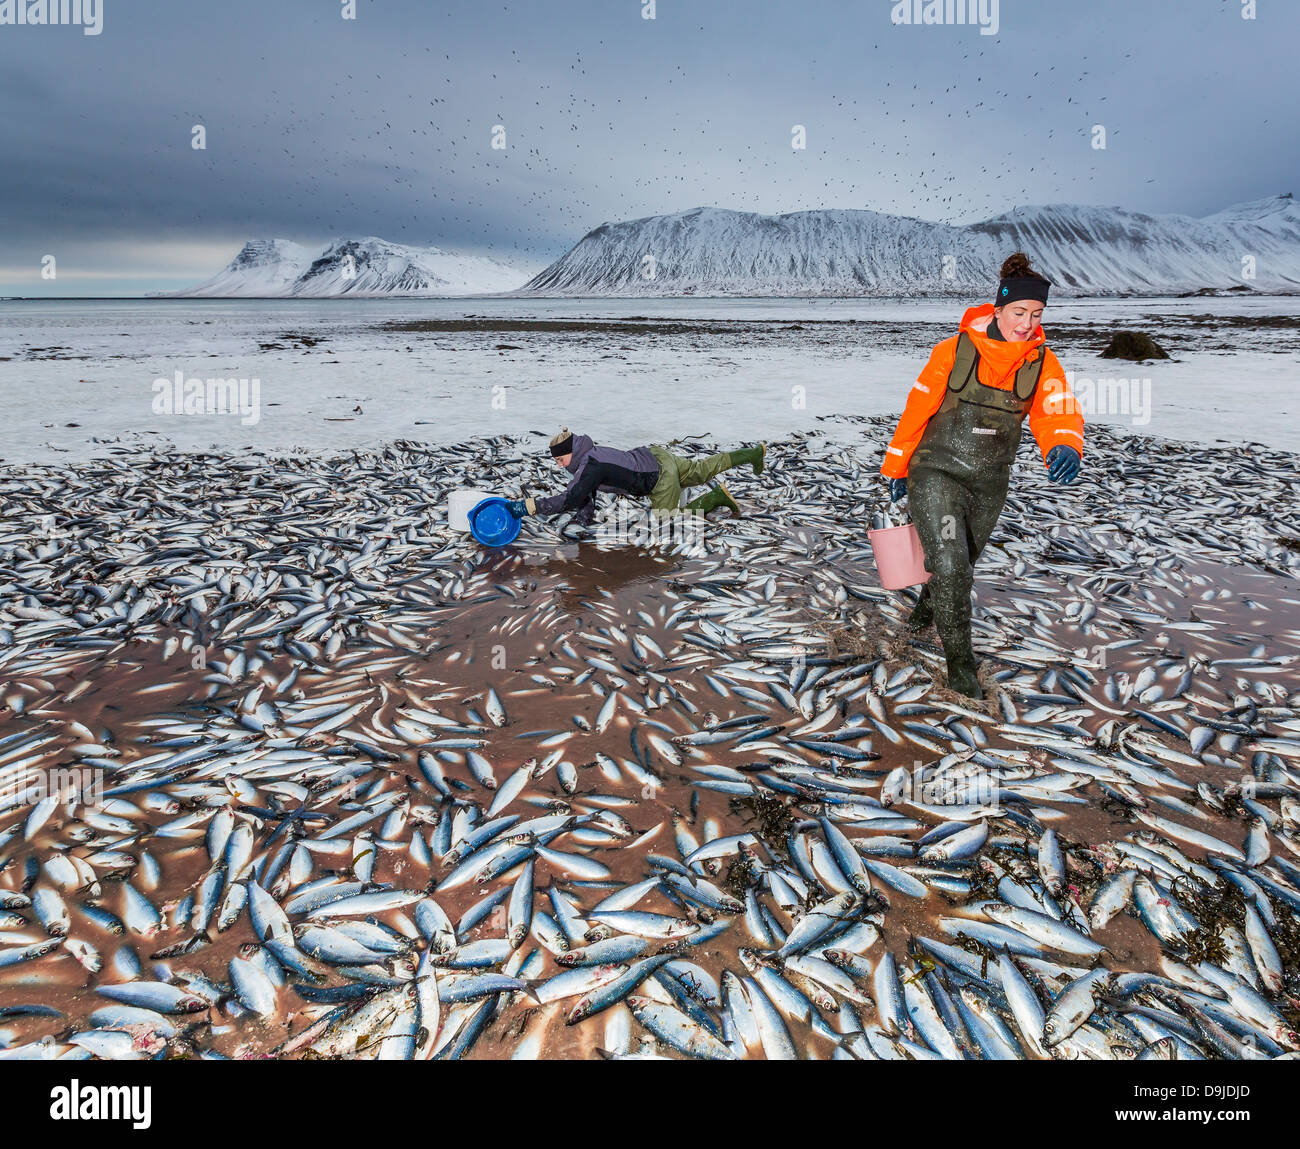 Arenque muerto. Limpiar las toneladas de arenques que murió n del fiordo. Kolgrafarfjordur, península de Snaefellsnes, Islandia. Foto de stock